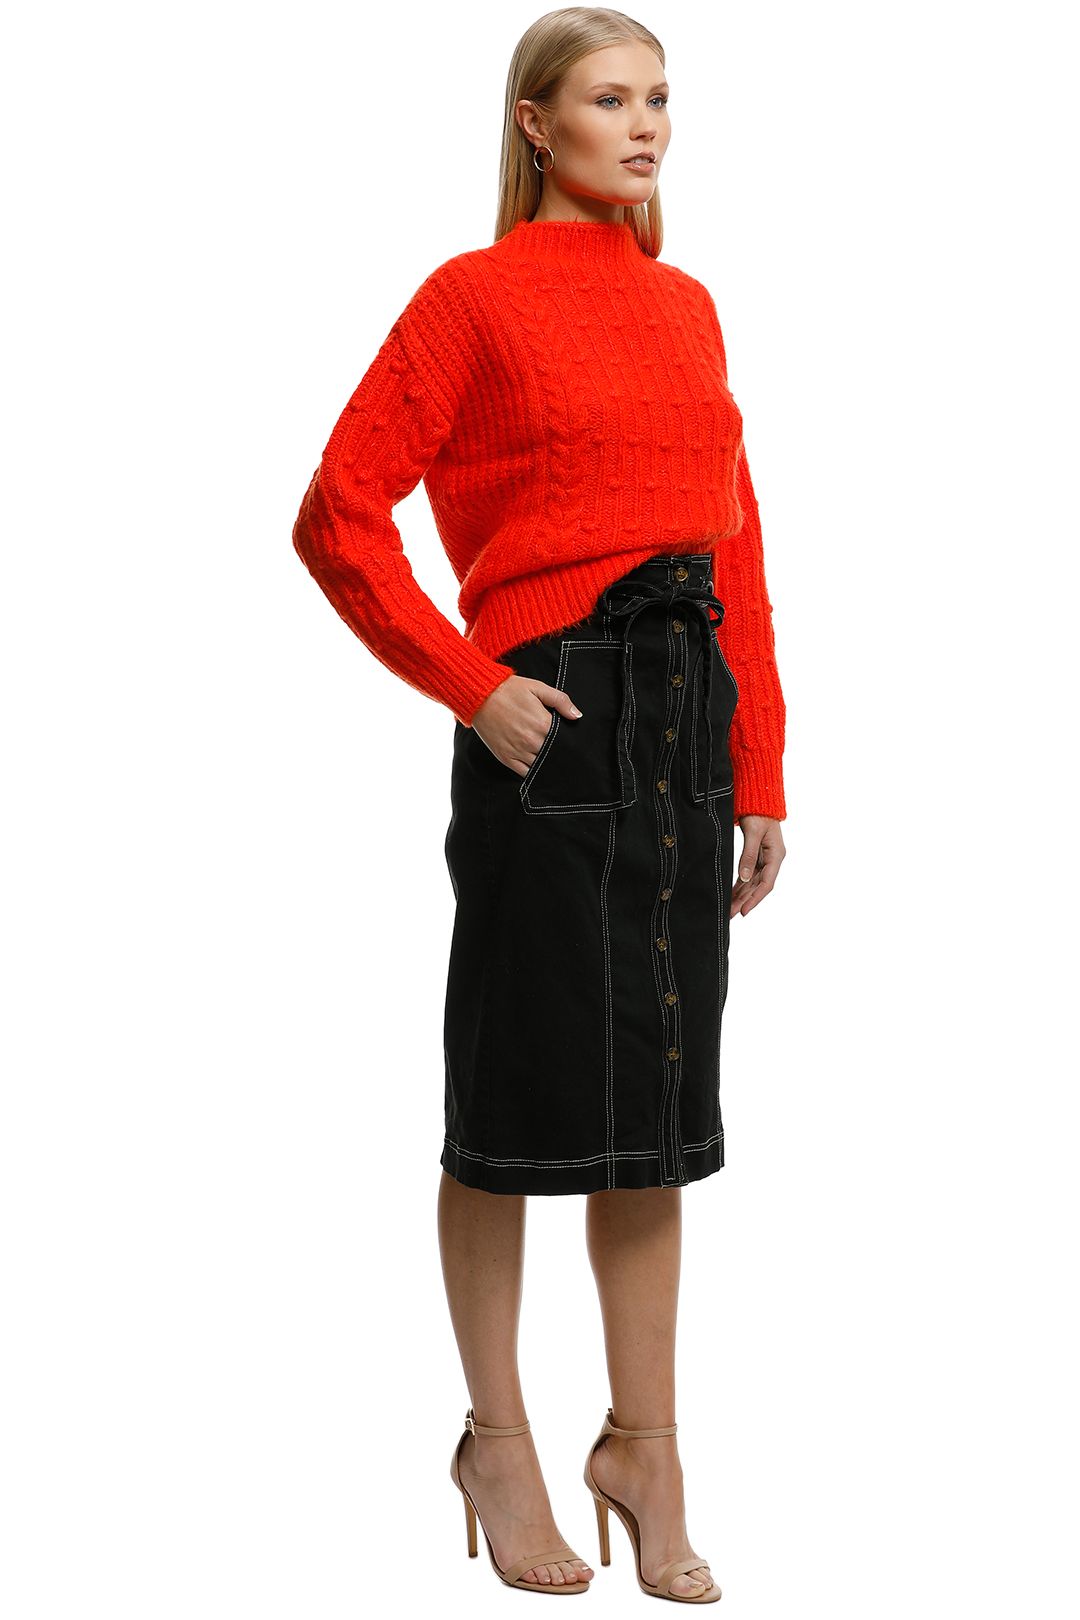 MNG - Contrasting Knit Sweater - Orange - Side